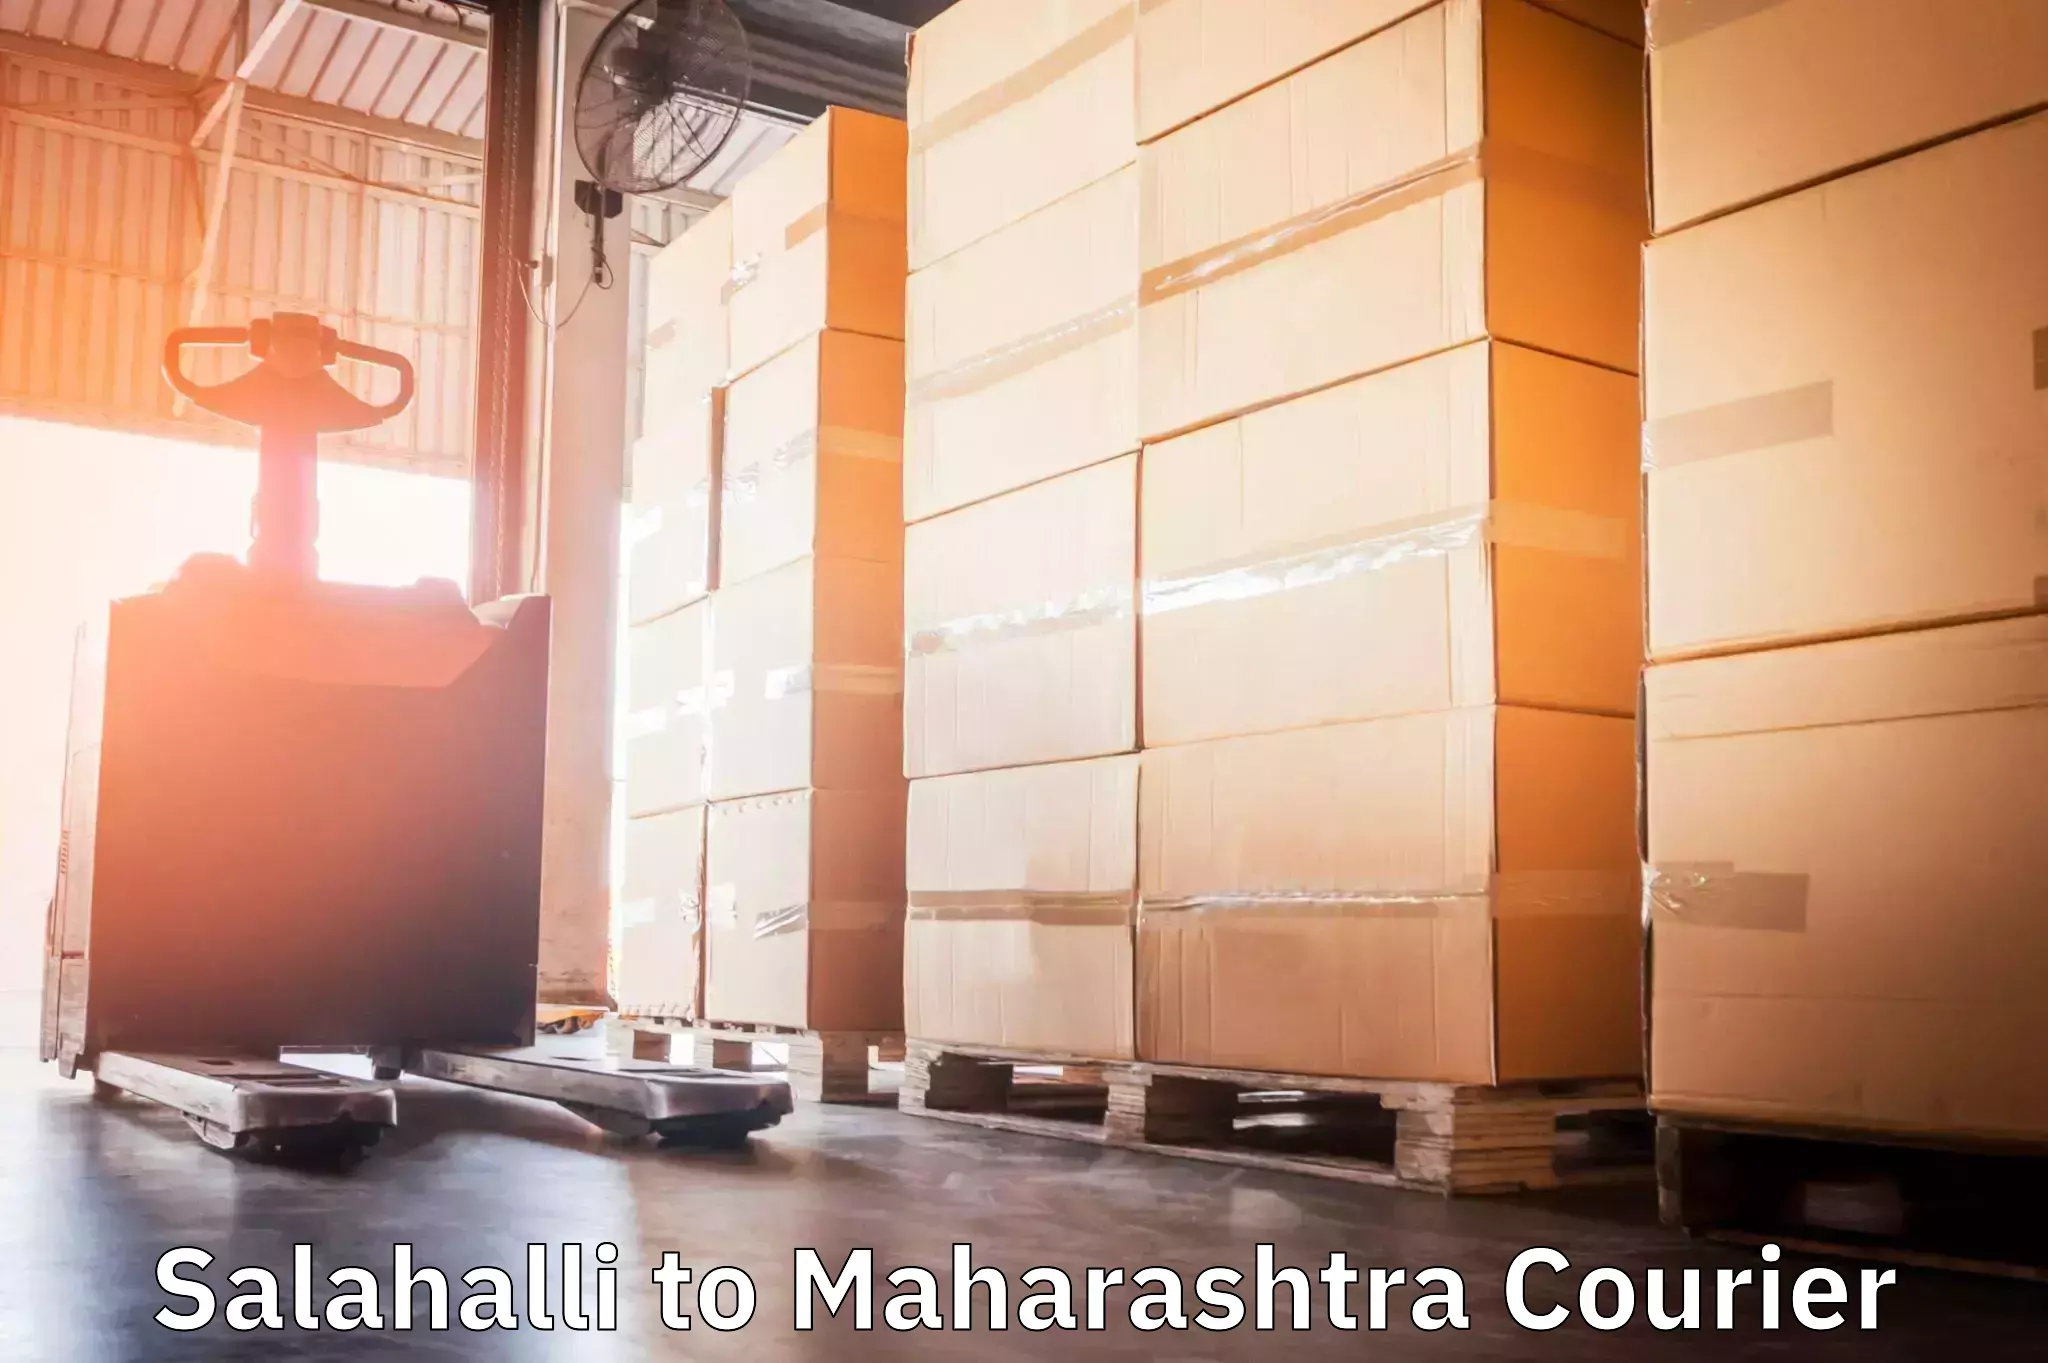 Logistics service provider Salahalli to Maharashtra